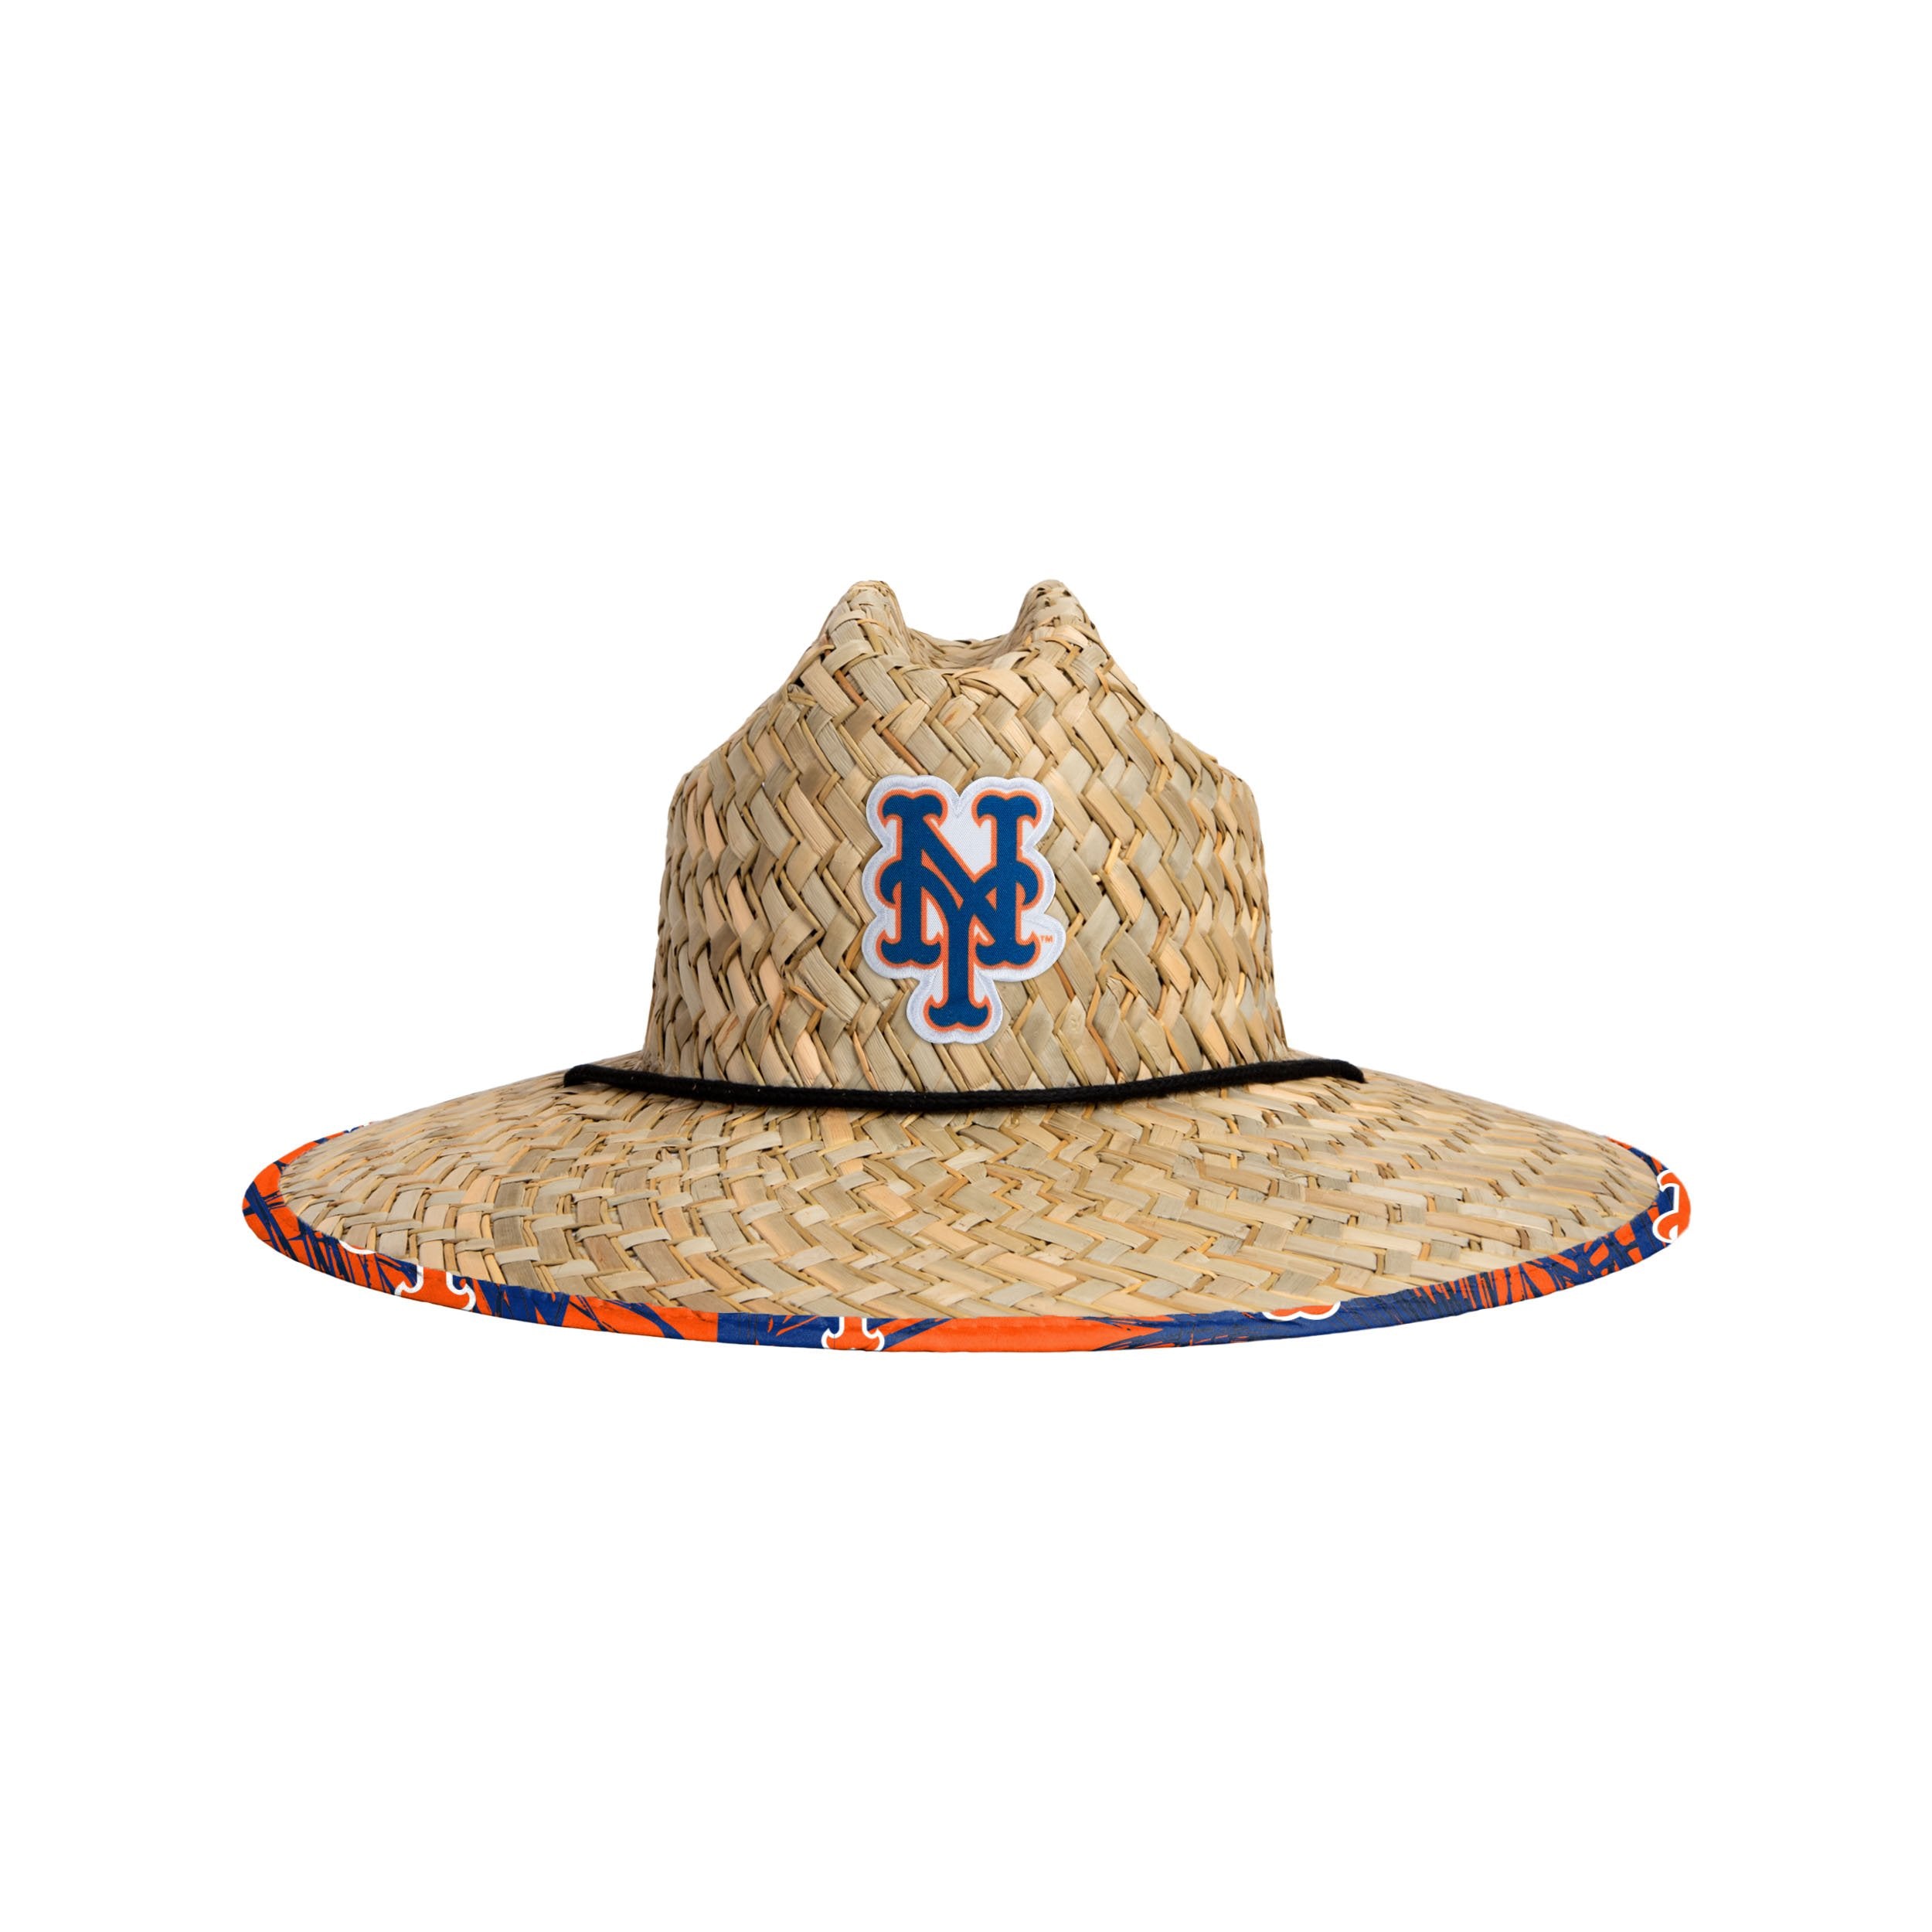 Luffy Straw Hat Jersey: NY Mets Baseball Style